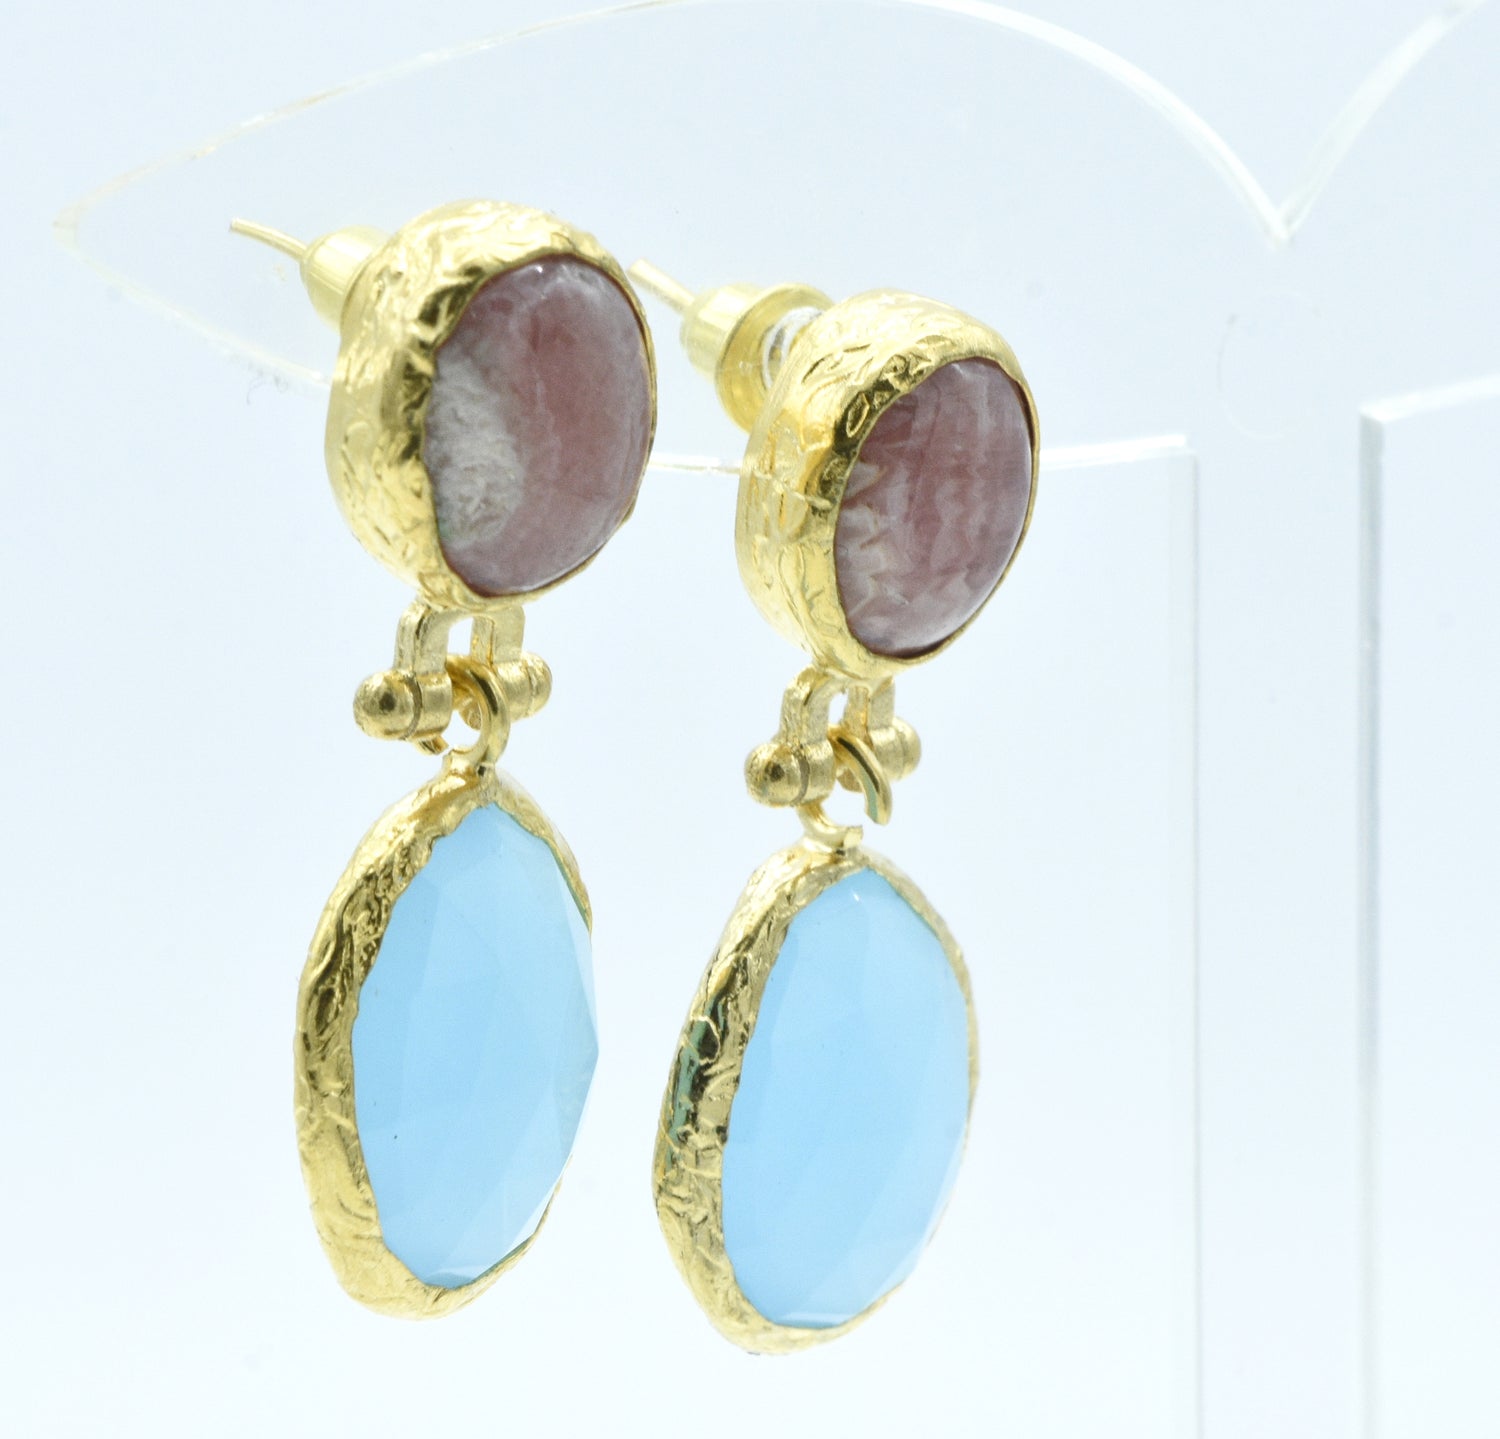 Aylas Agate and Aqua Marine earrings - 21ct Gold plated semi precious gemstone - Handmade in Ottoman Style by Artisan